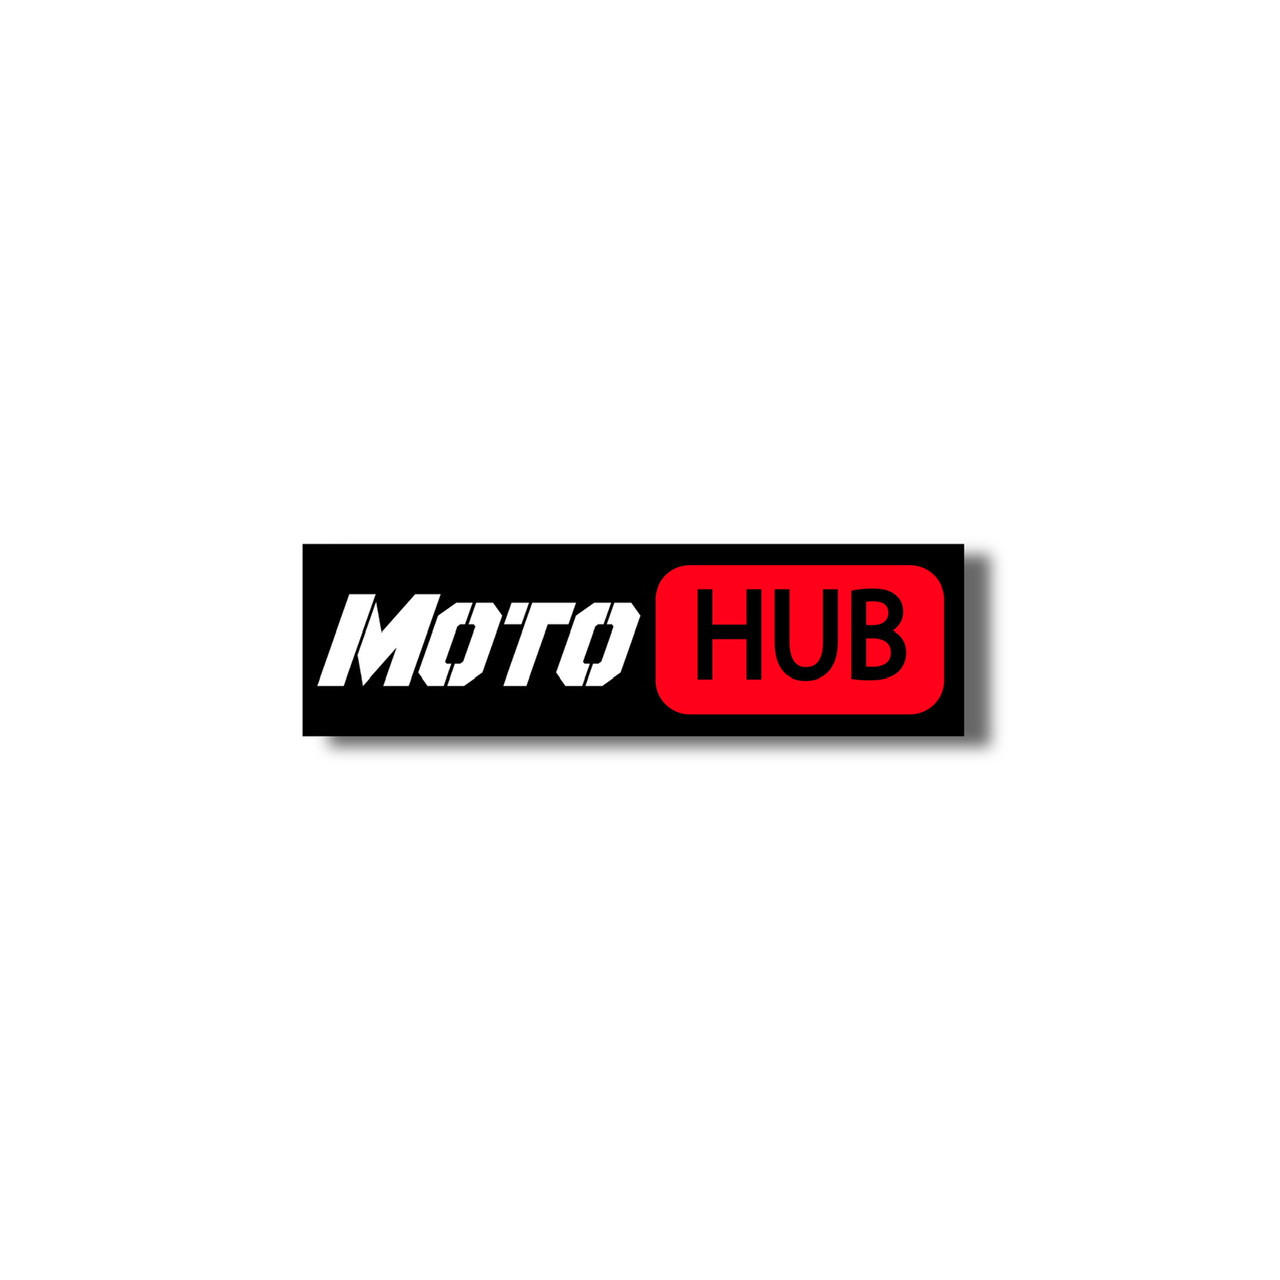 Moto Hub Sticker